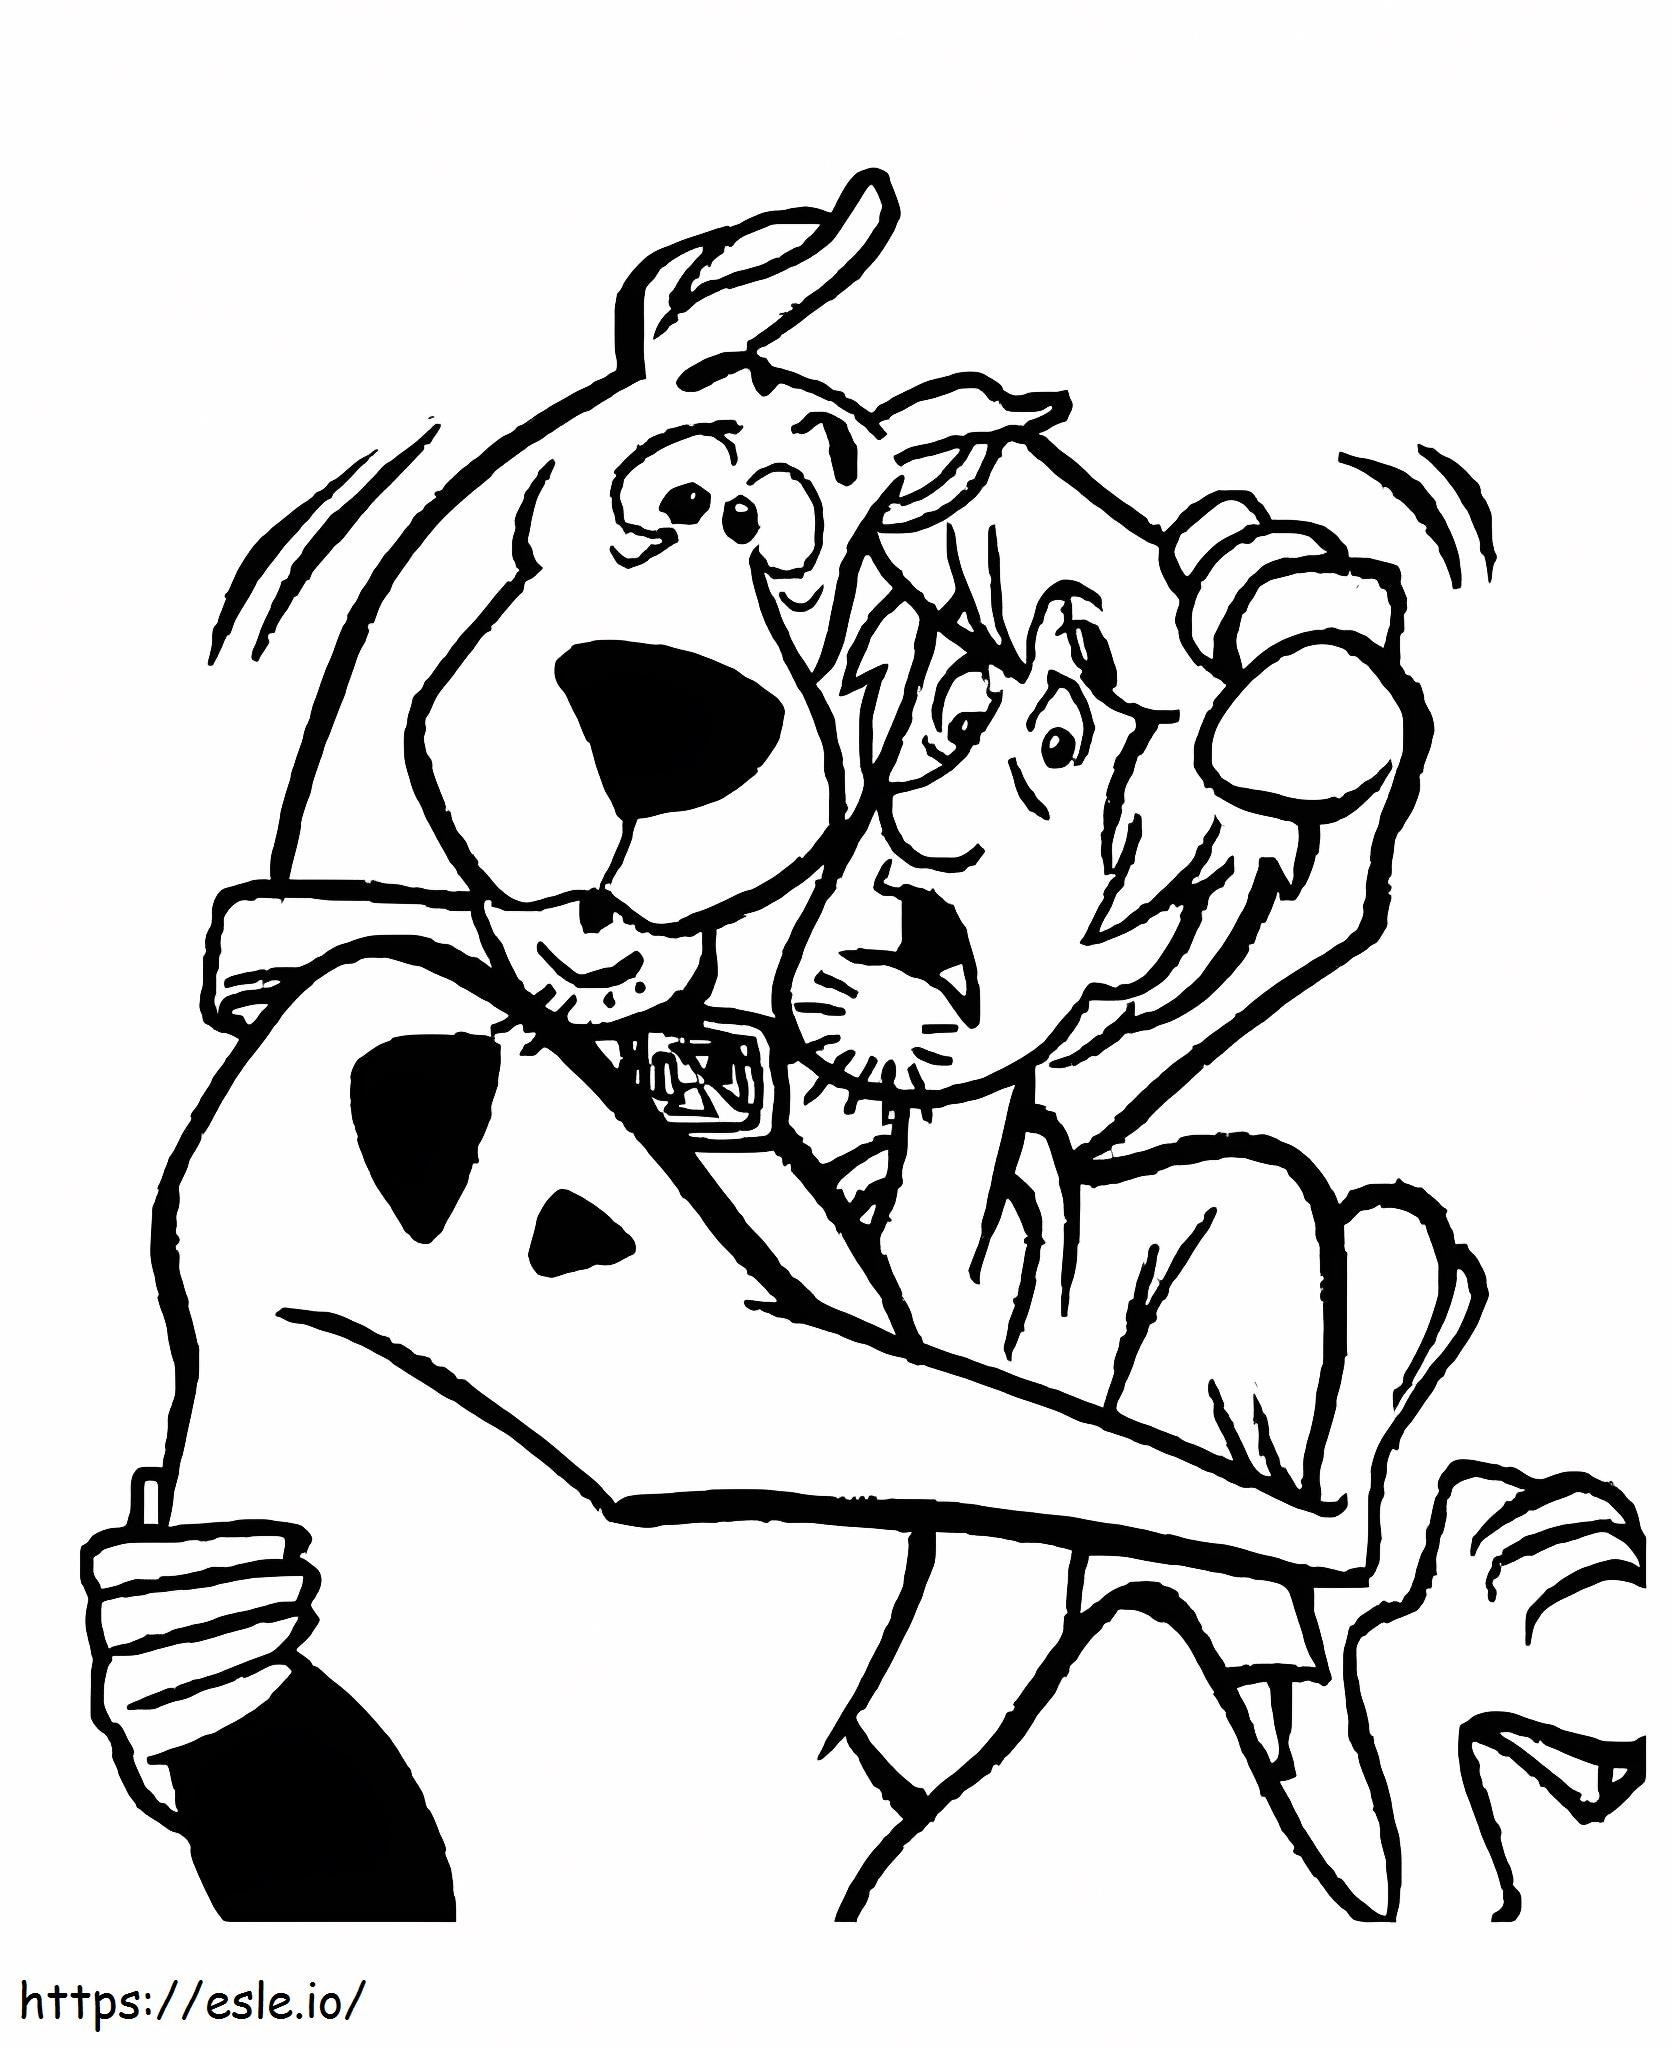 Shaggy umarmt Scooby Doo ausmalbilder